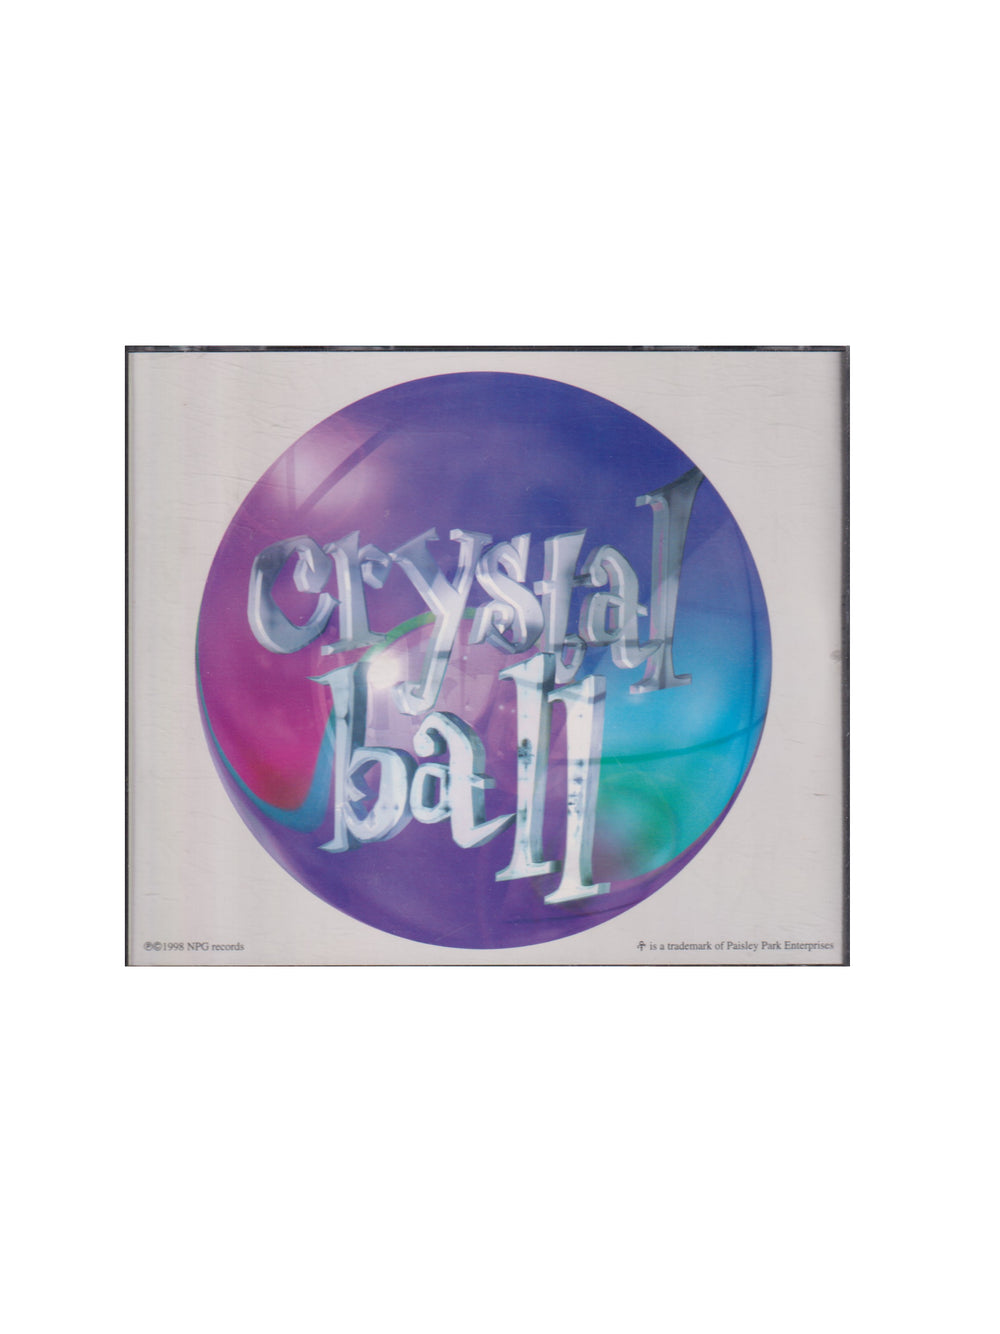 Prince – 0(+> Crystal Ball 3 x CD Album Truth 1 x CD UK Europe